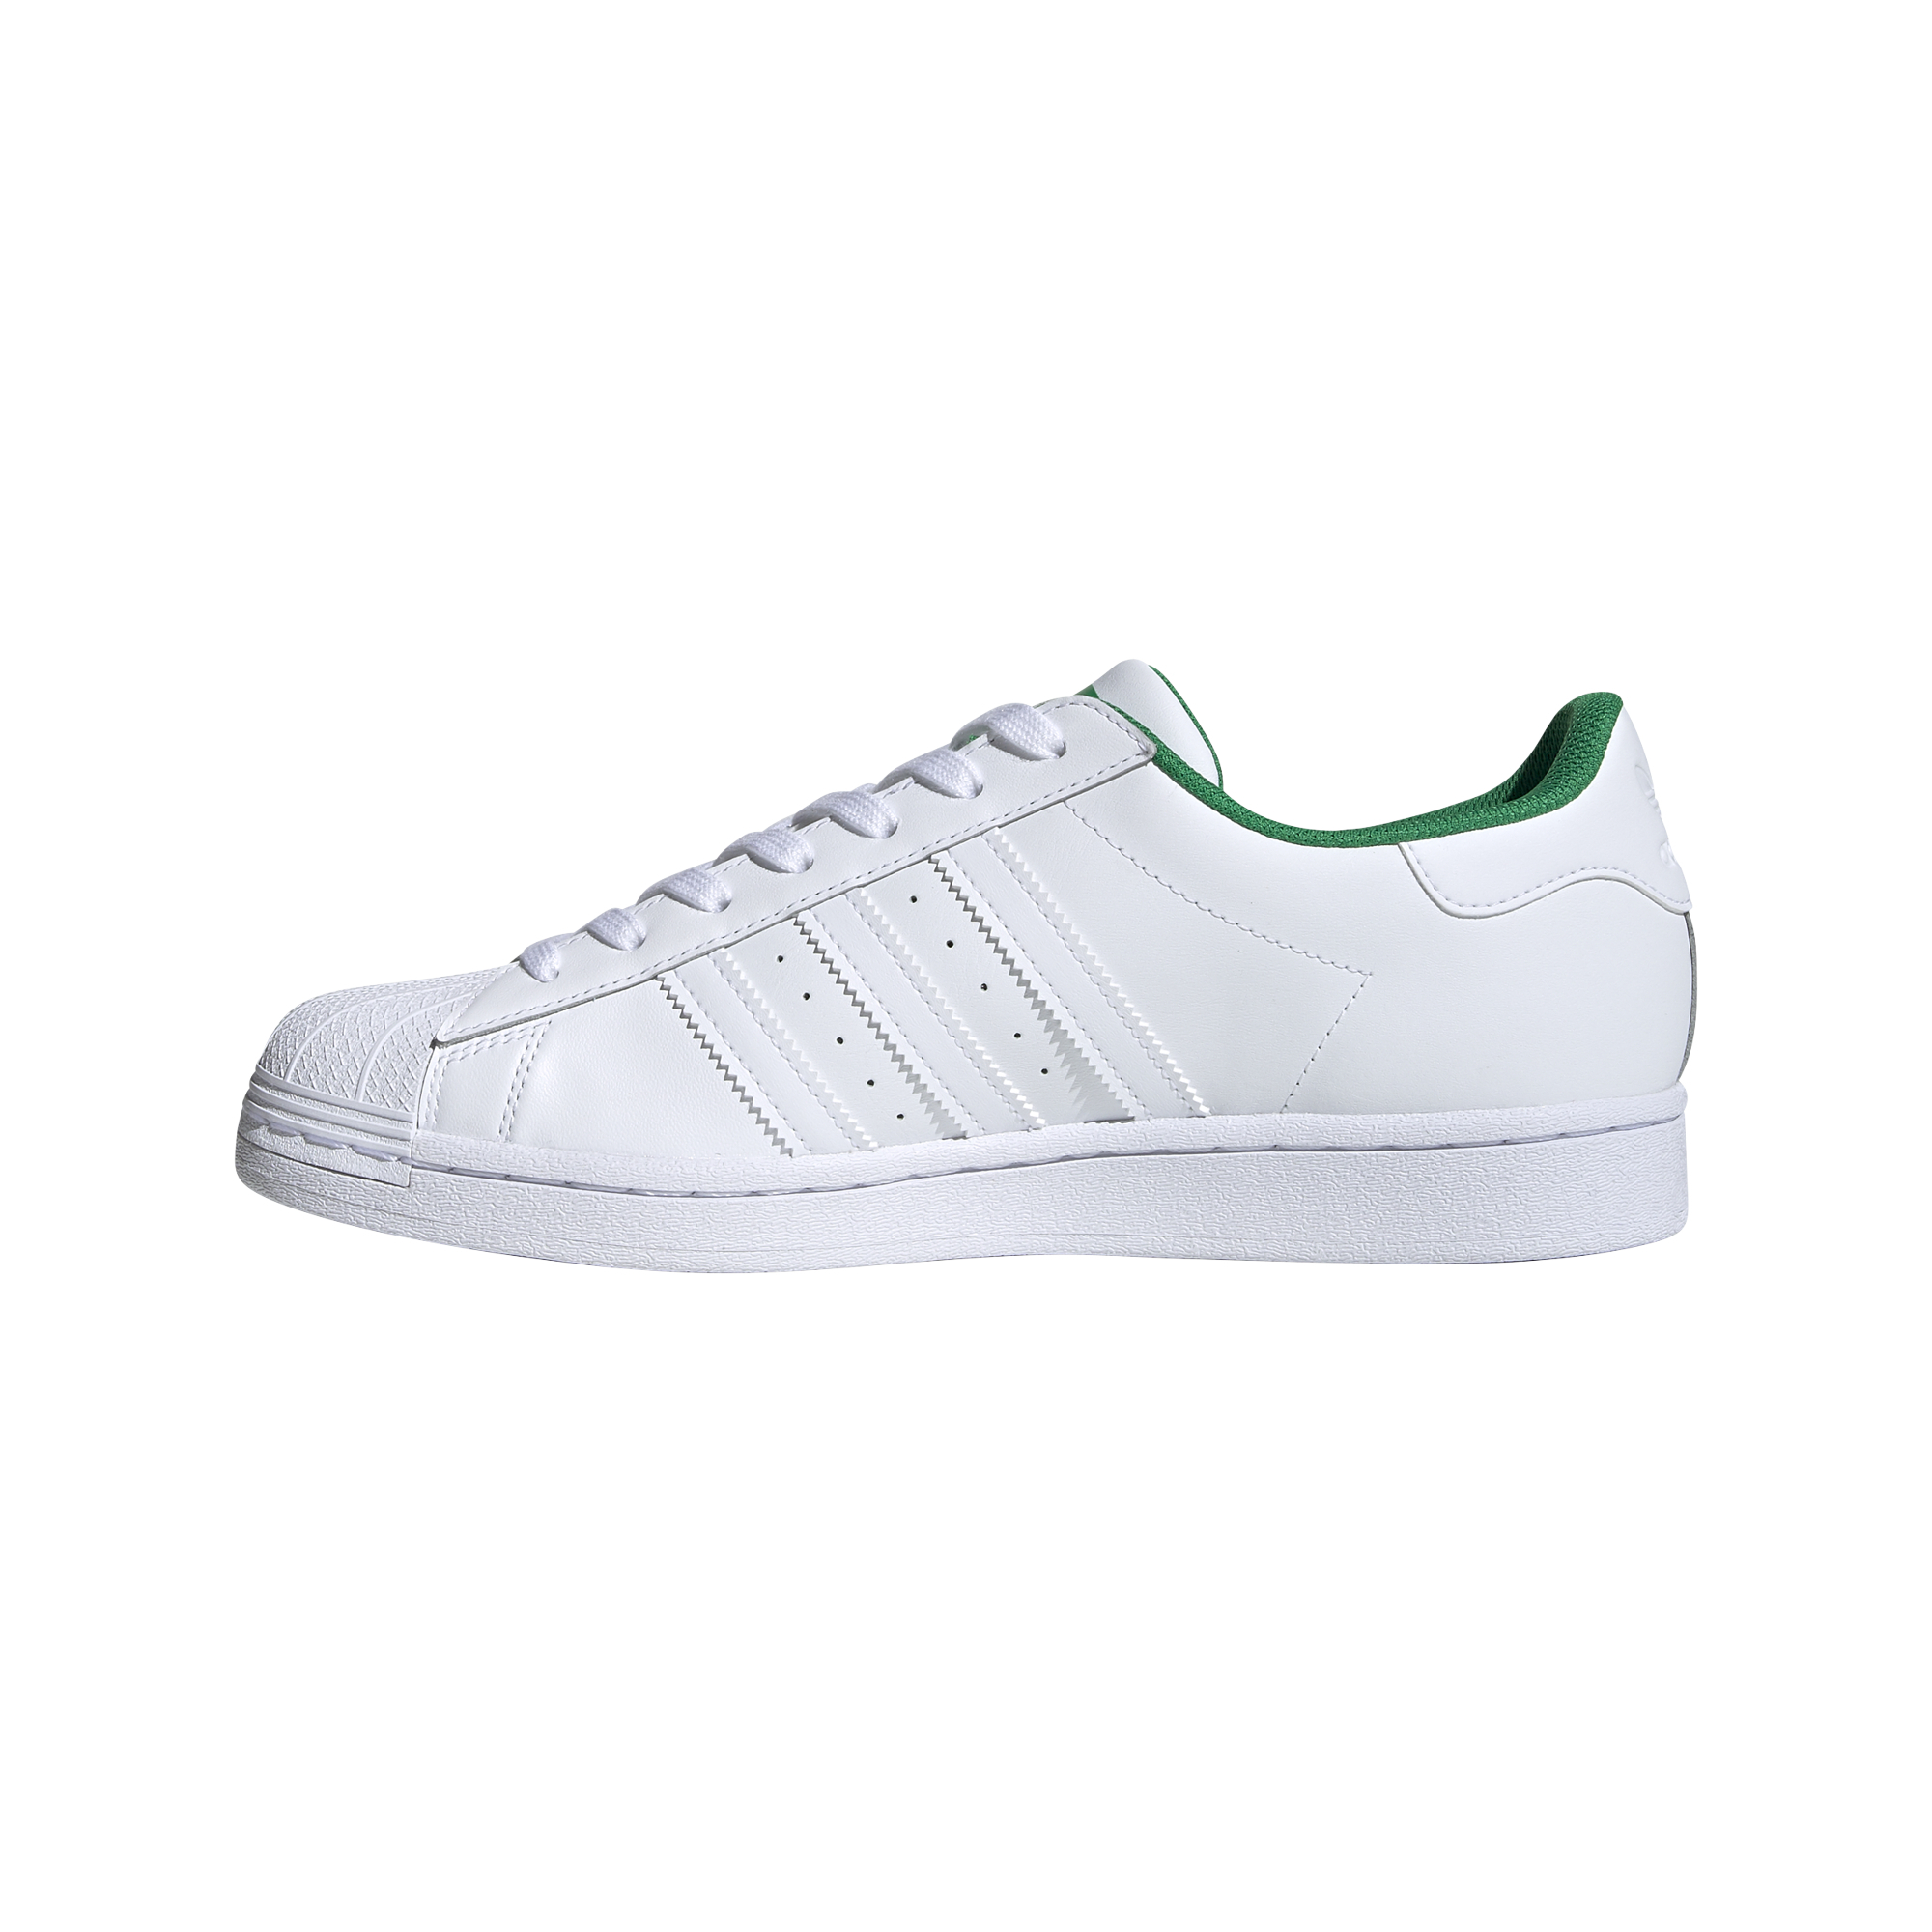 Pánské tenisky a boty adidas Superstar Ftw White/ Ftw White/ Green